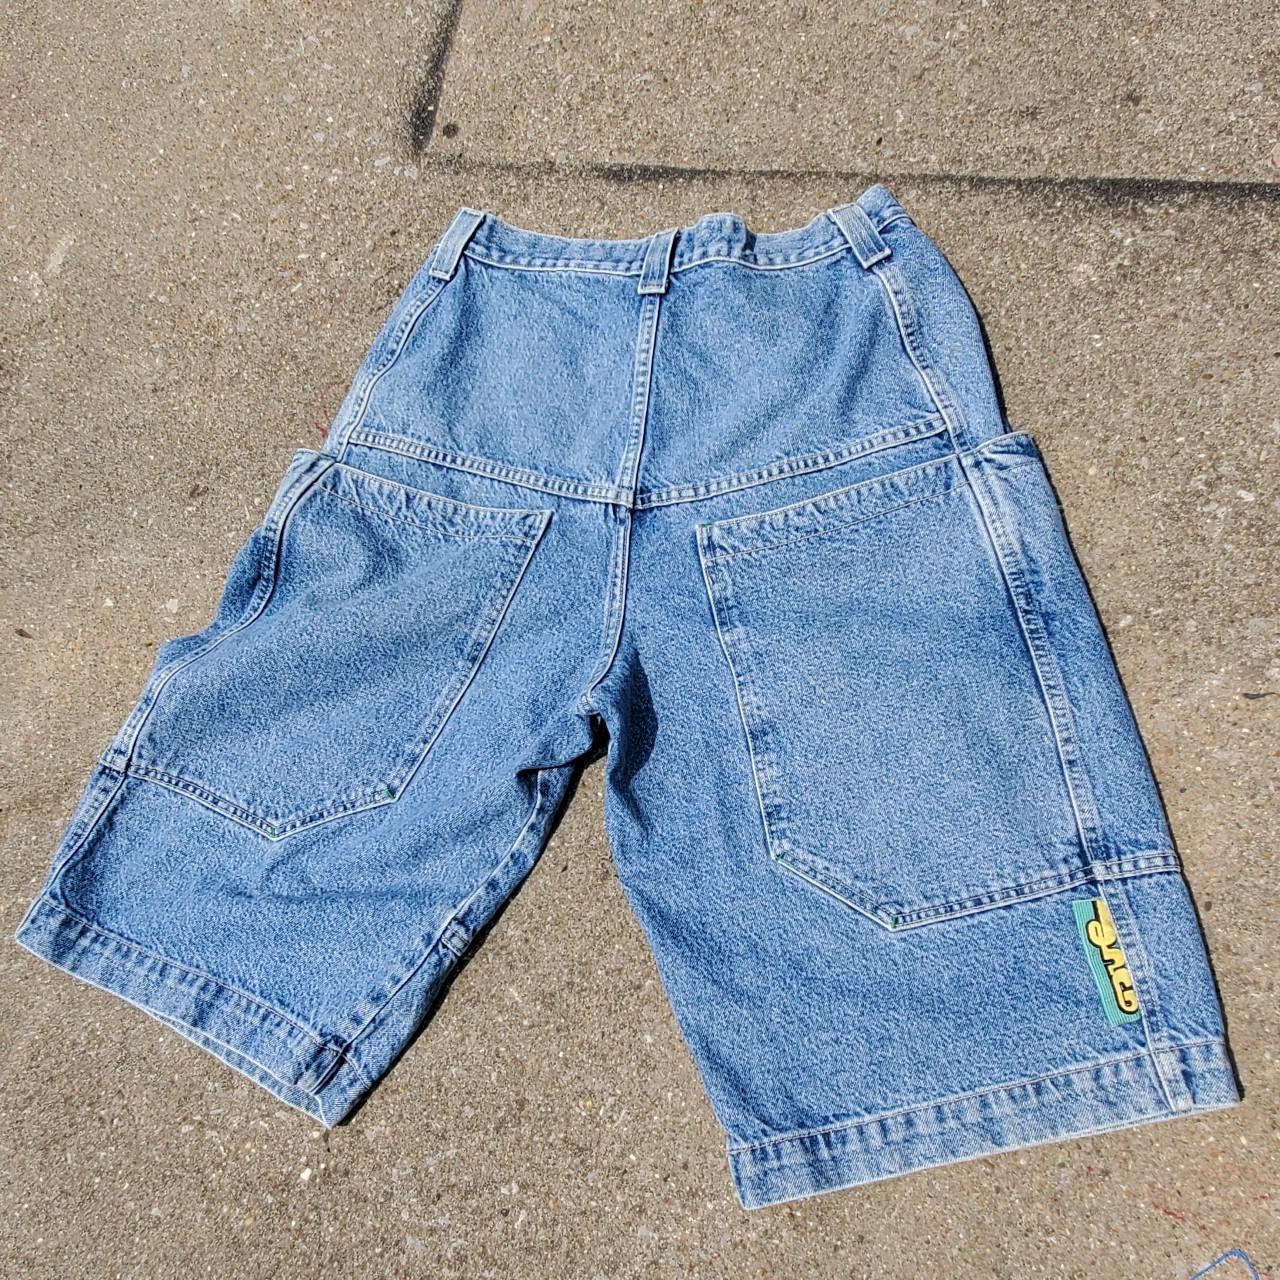 Jnco jean shorts baggy 90s style vintage good... - Depop